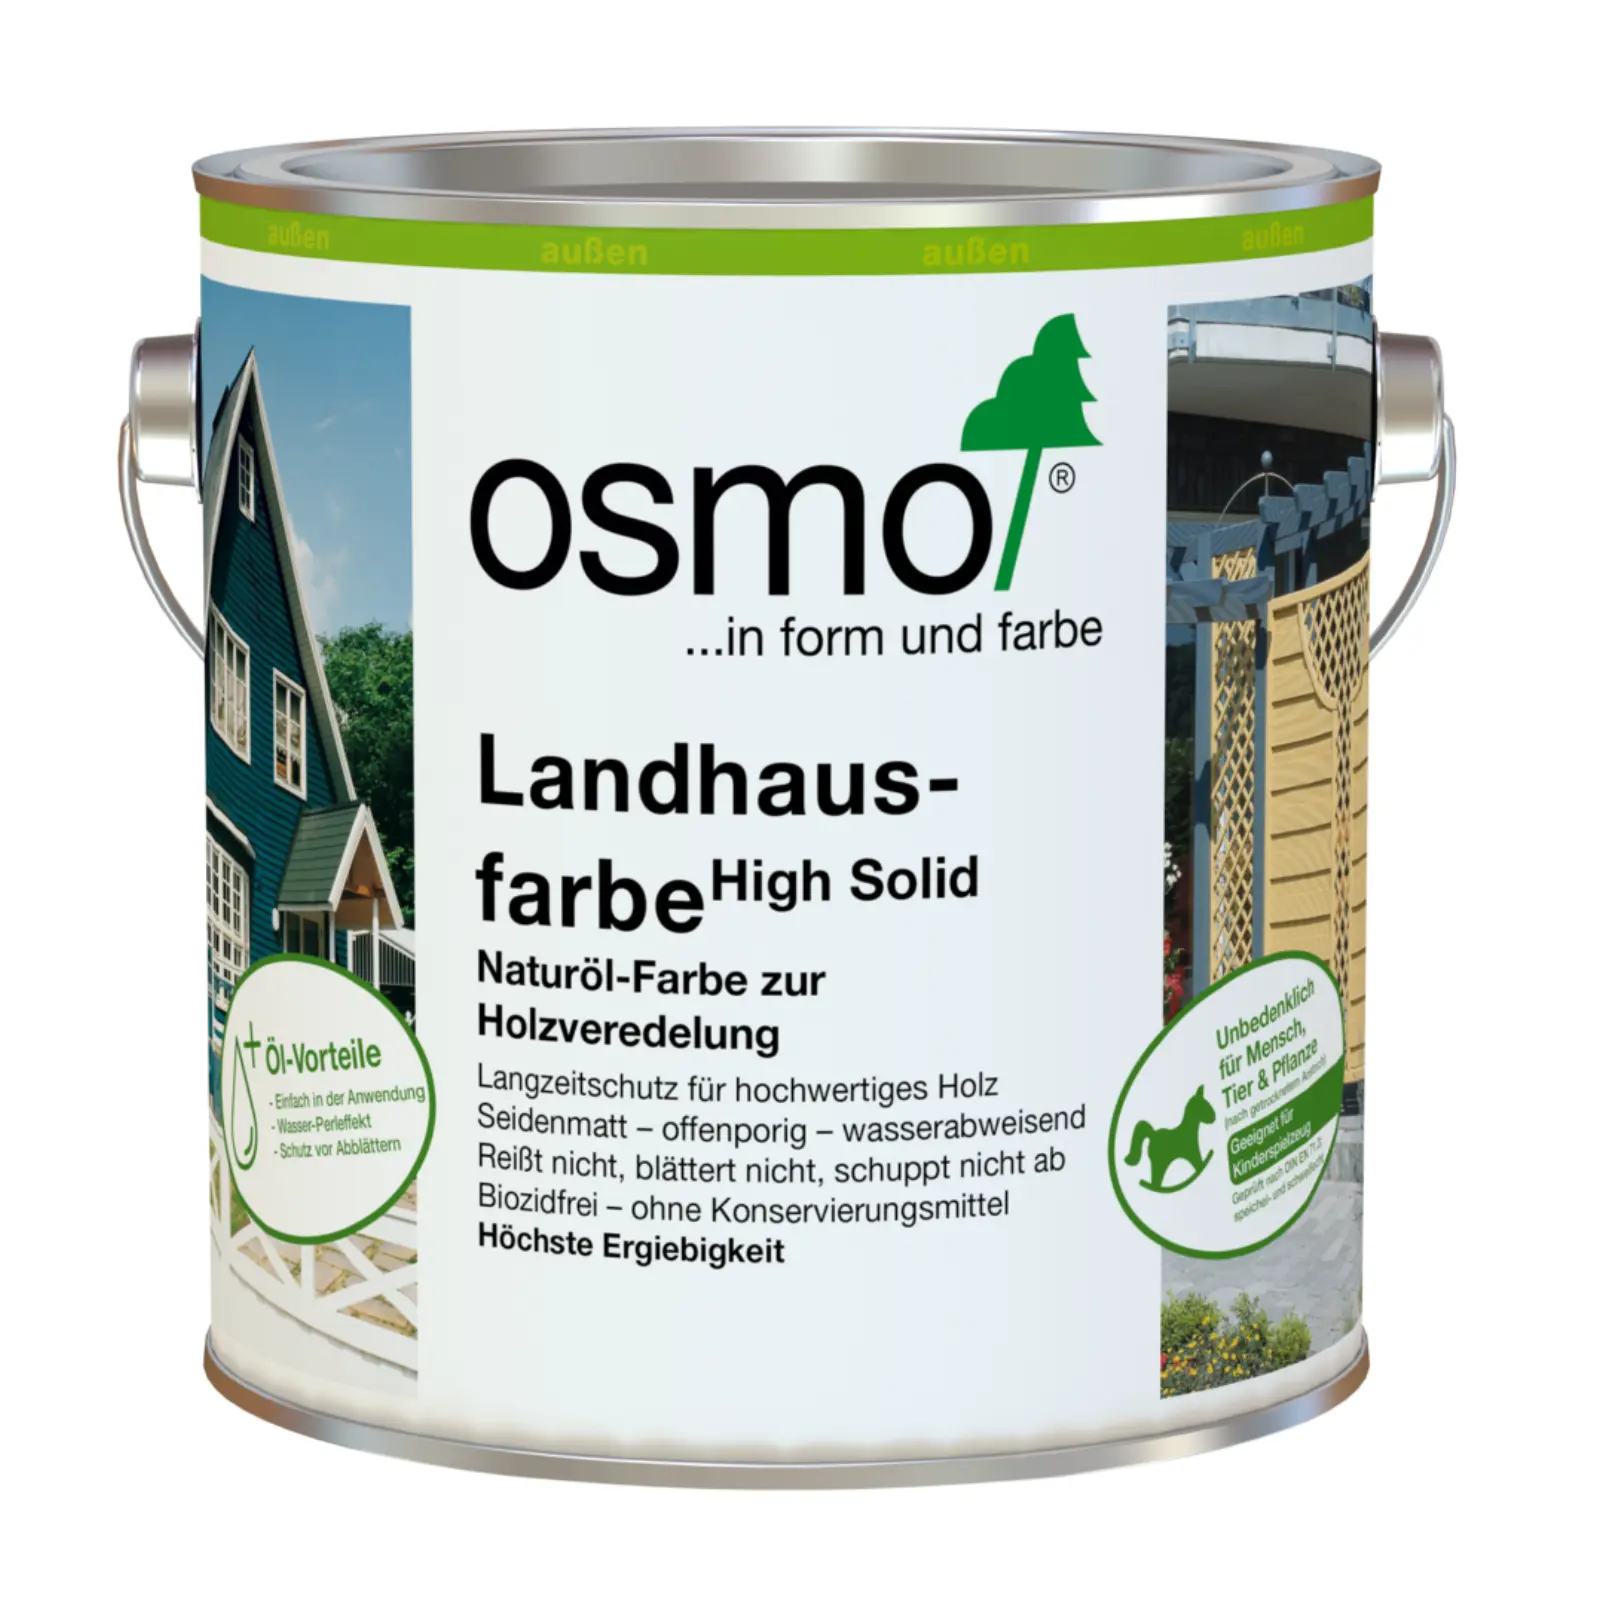 Osmo Landhausfarbe High Solid Farbton 2404 Tannengrün 2,5 Liter